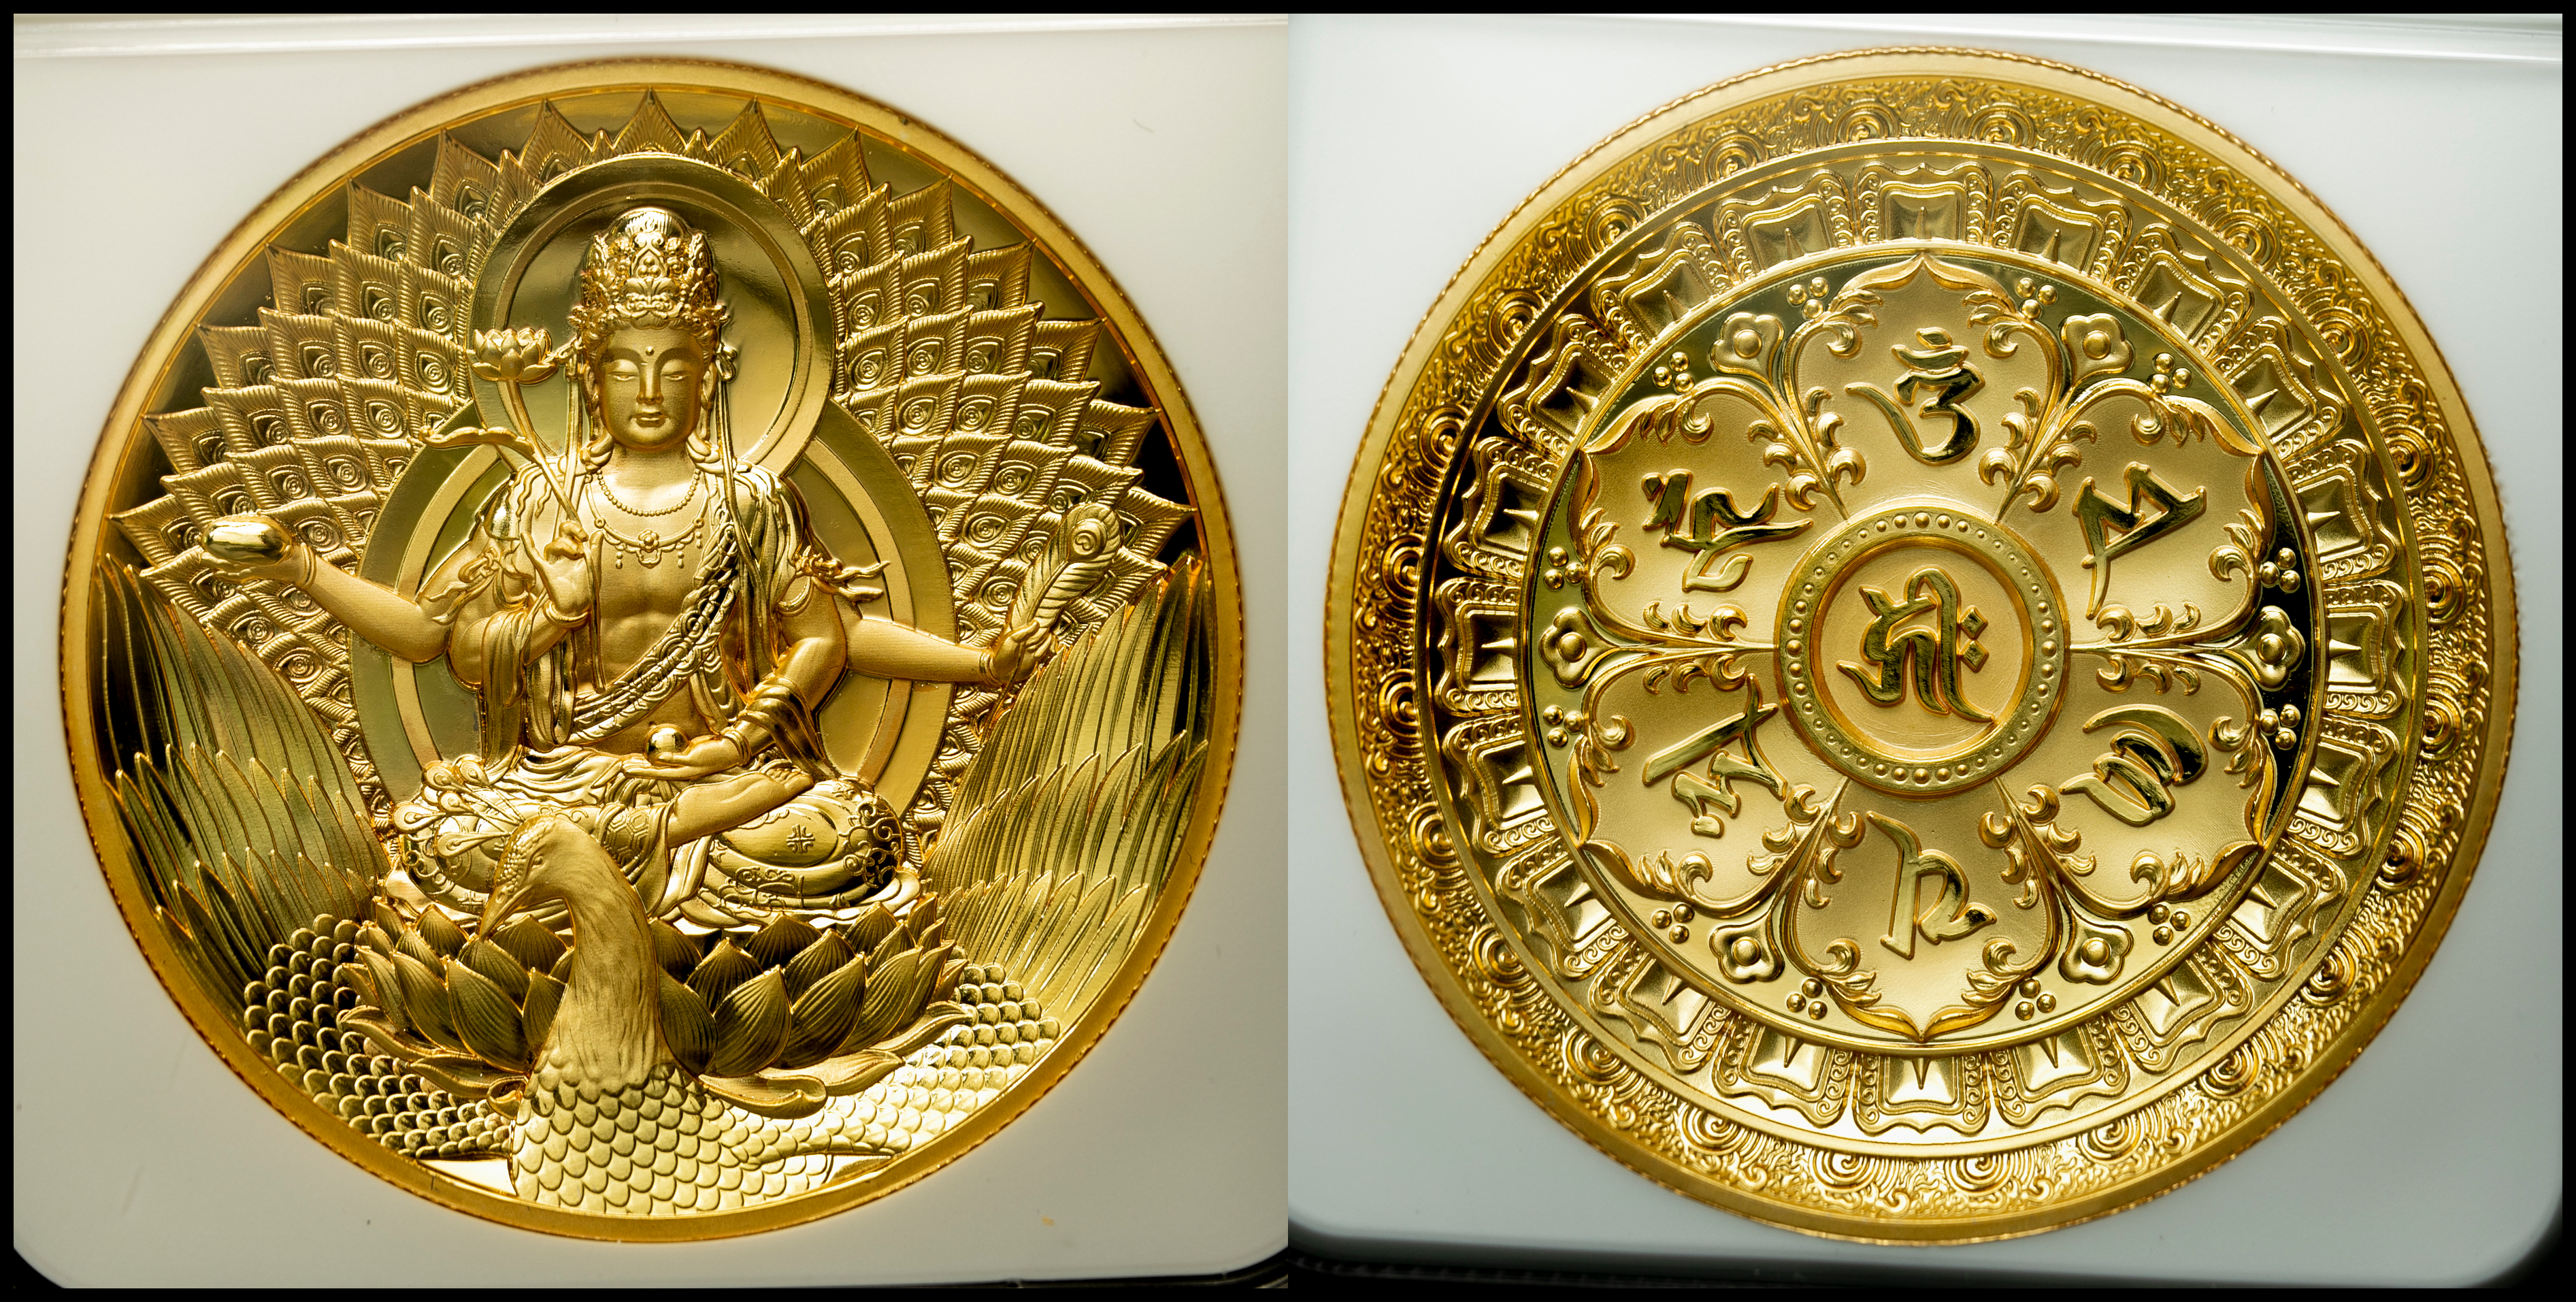 【NGC-PF70　Ultra Cameo】仏教像 金張り銅メダル  中国嘉日の小物とアンティークコイン